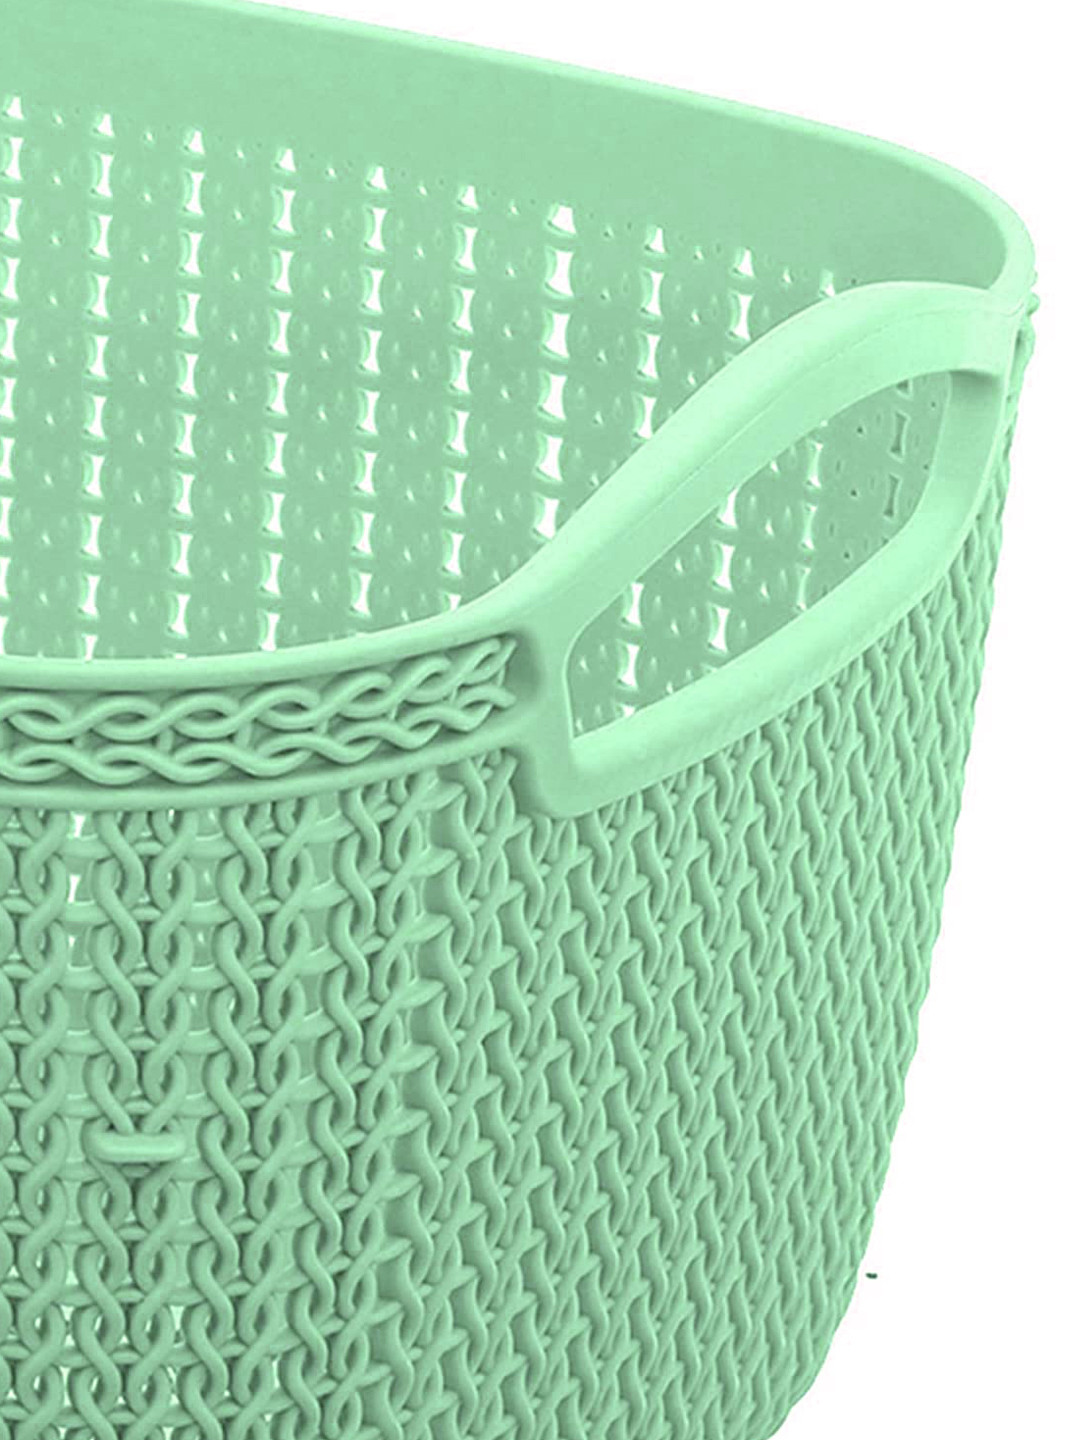 Kuber Industries Q-6 Unbreakable Plastic Multipurpose Large Size Flexible Storage Baskets/Fruit Vegetable Bathroom Stationary Home Basket with Handles (Light Green & Light Blue)